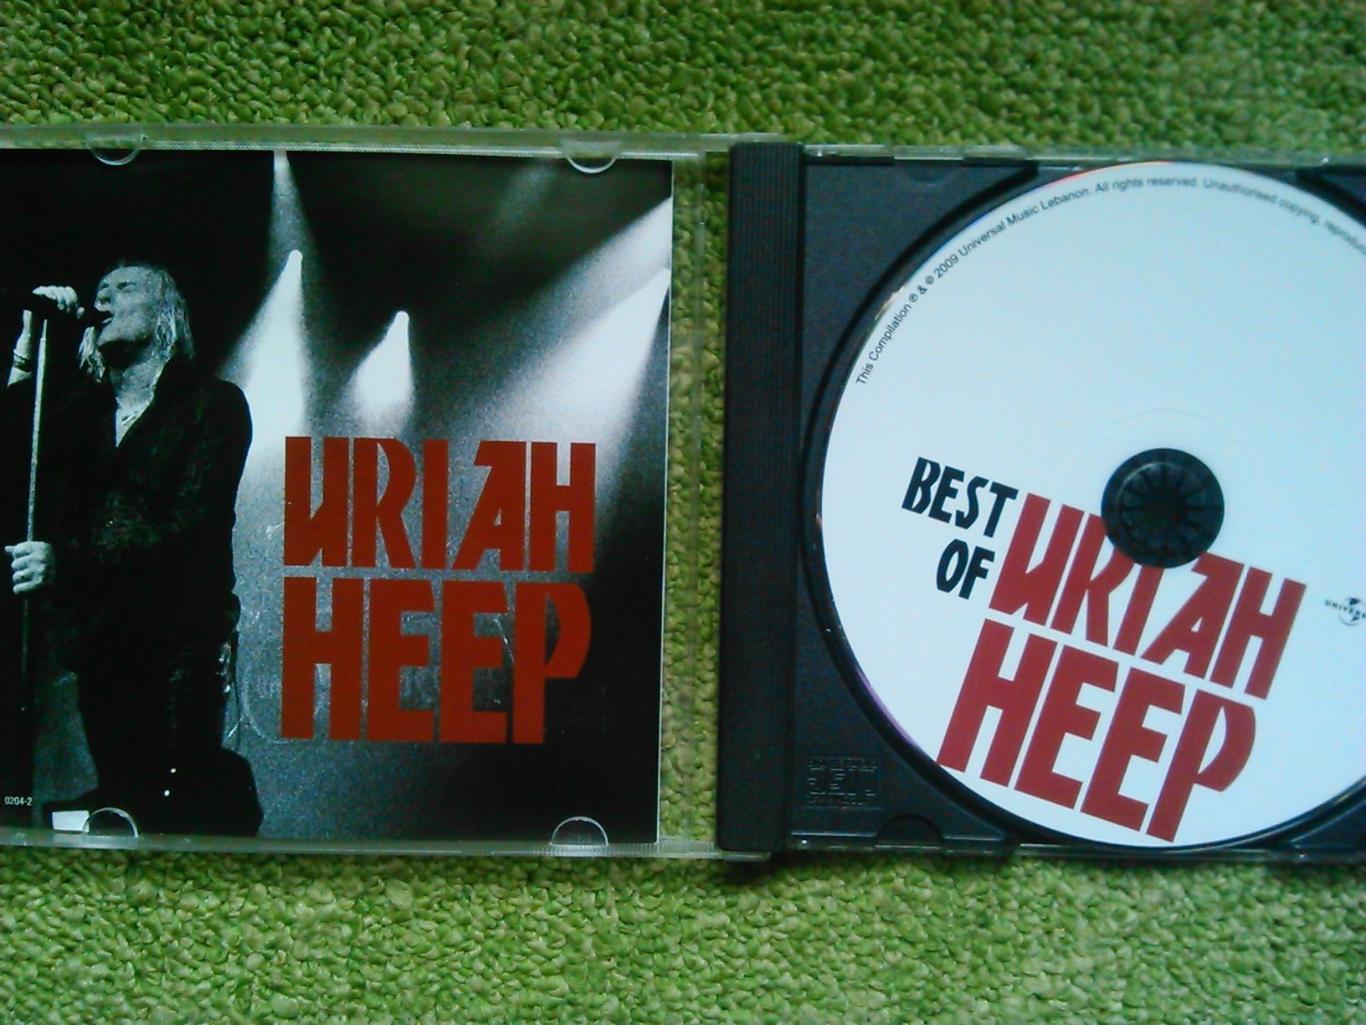 Audio CD. URIAH HEEP - The Of Best. Оптом скидки до 47%! 2